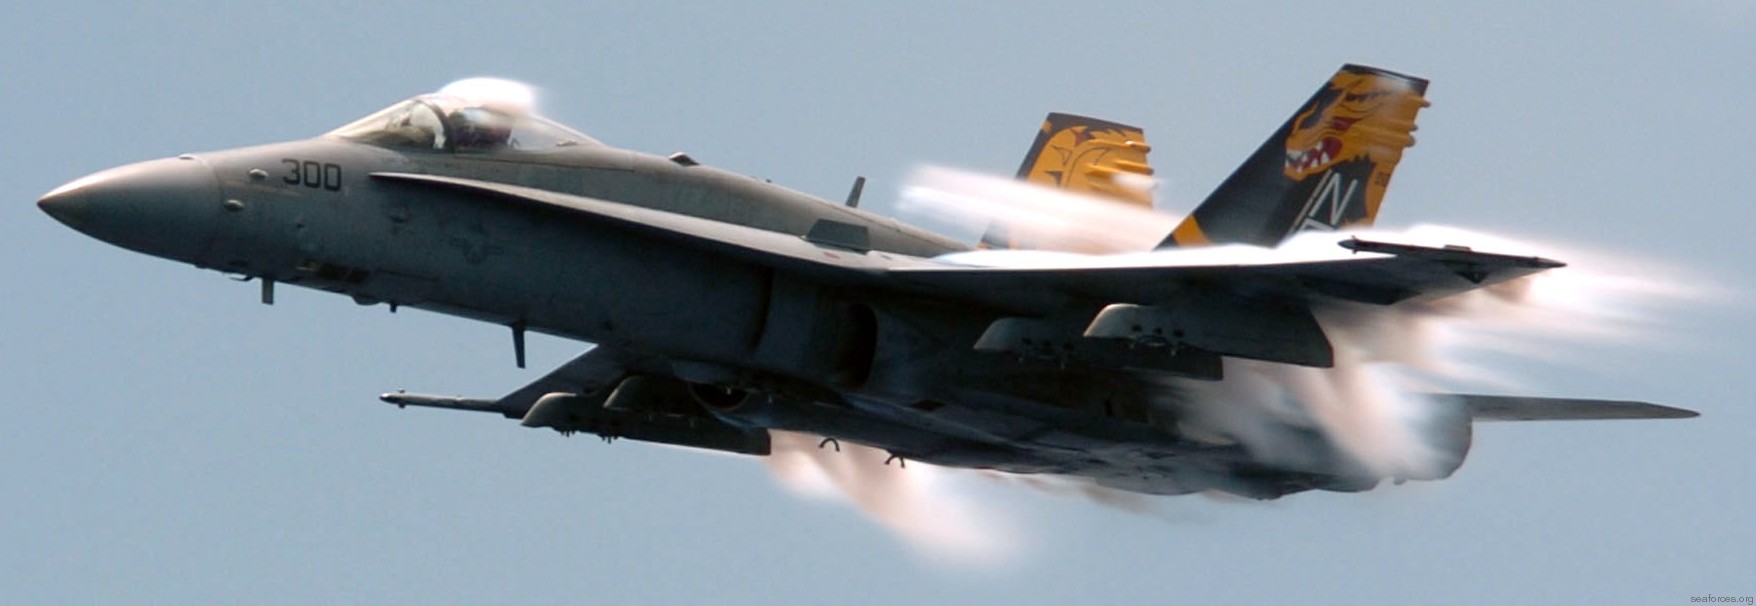 vfa-192 golden dragons strike fighter squadron navy f/a-18c hornet carrier air wing cvw-5 uss kitty hawk cv-63 70